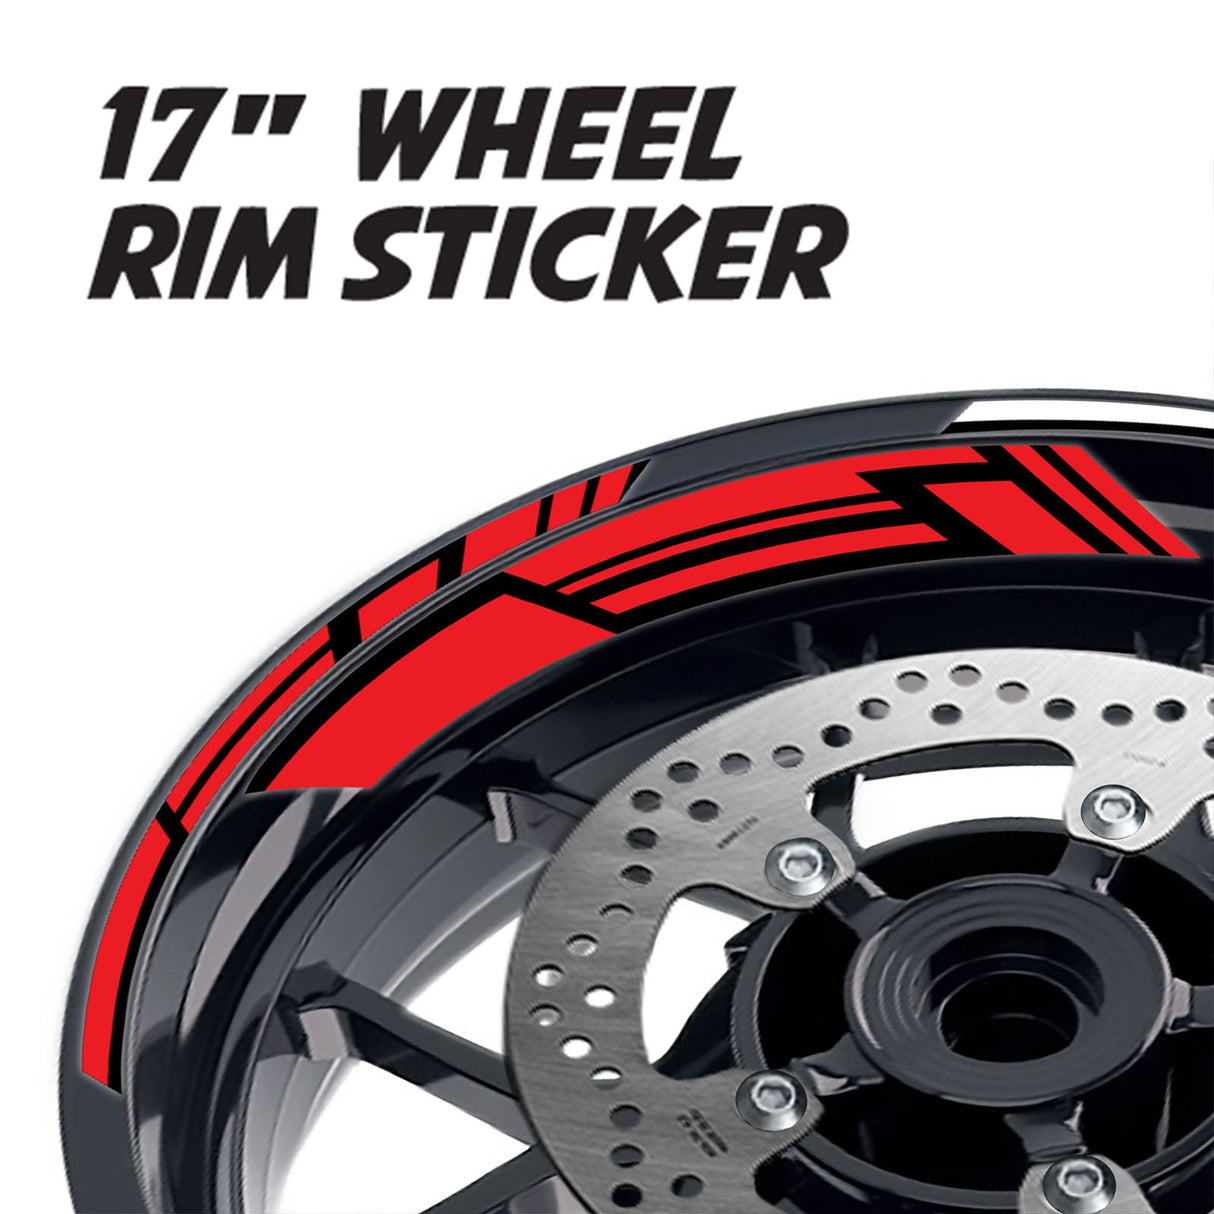 StickerBao Red 17 inch GP19 Platinum Inner Edge Rim Sticker Universal Motorcycle Rim Wheel Decal Racing For Honda